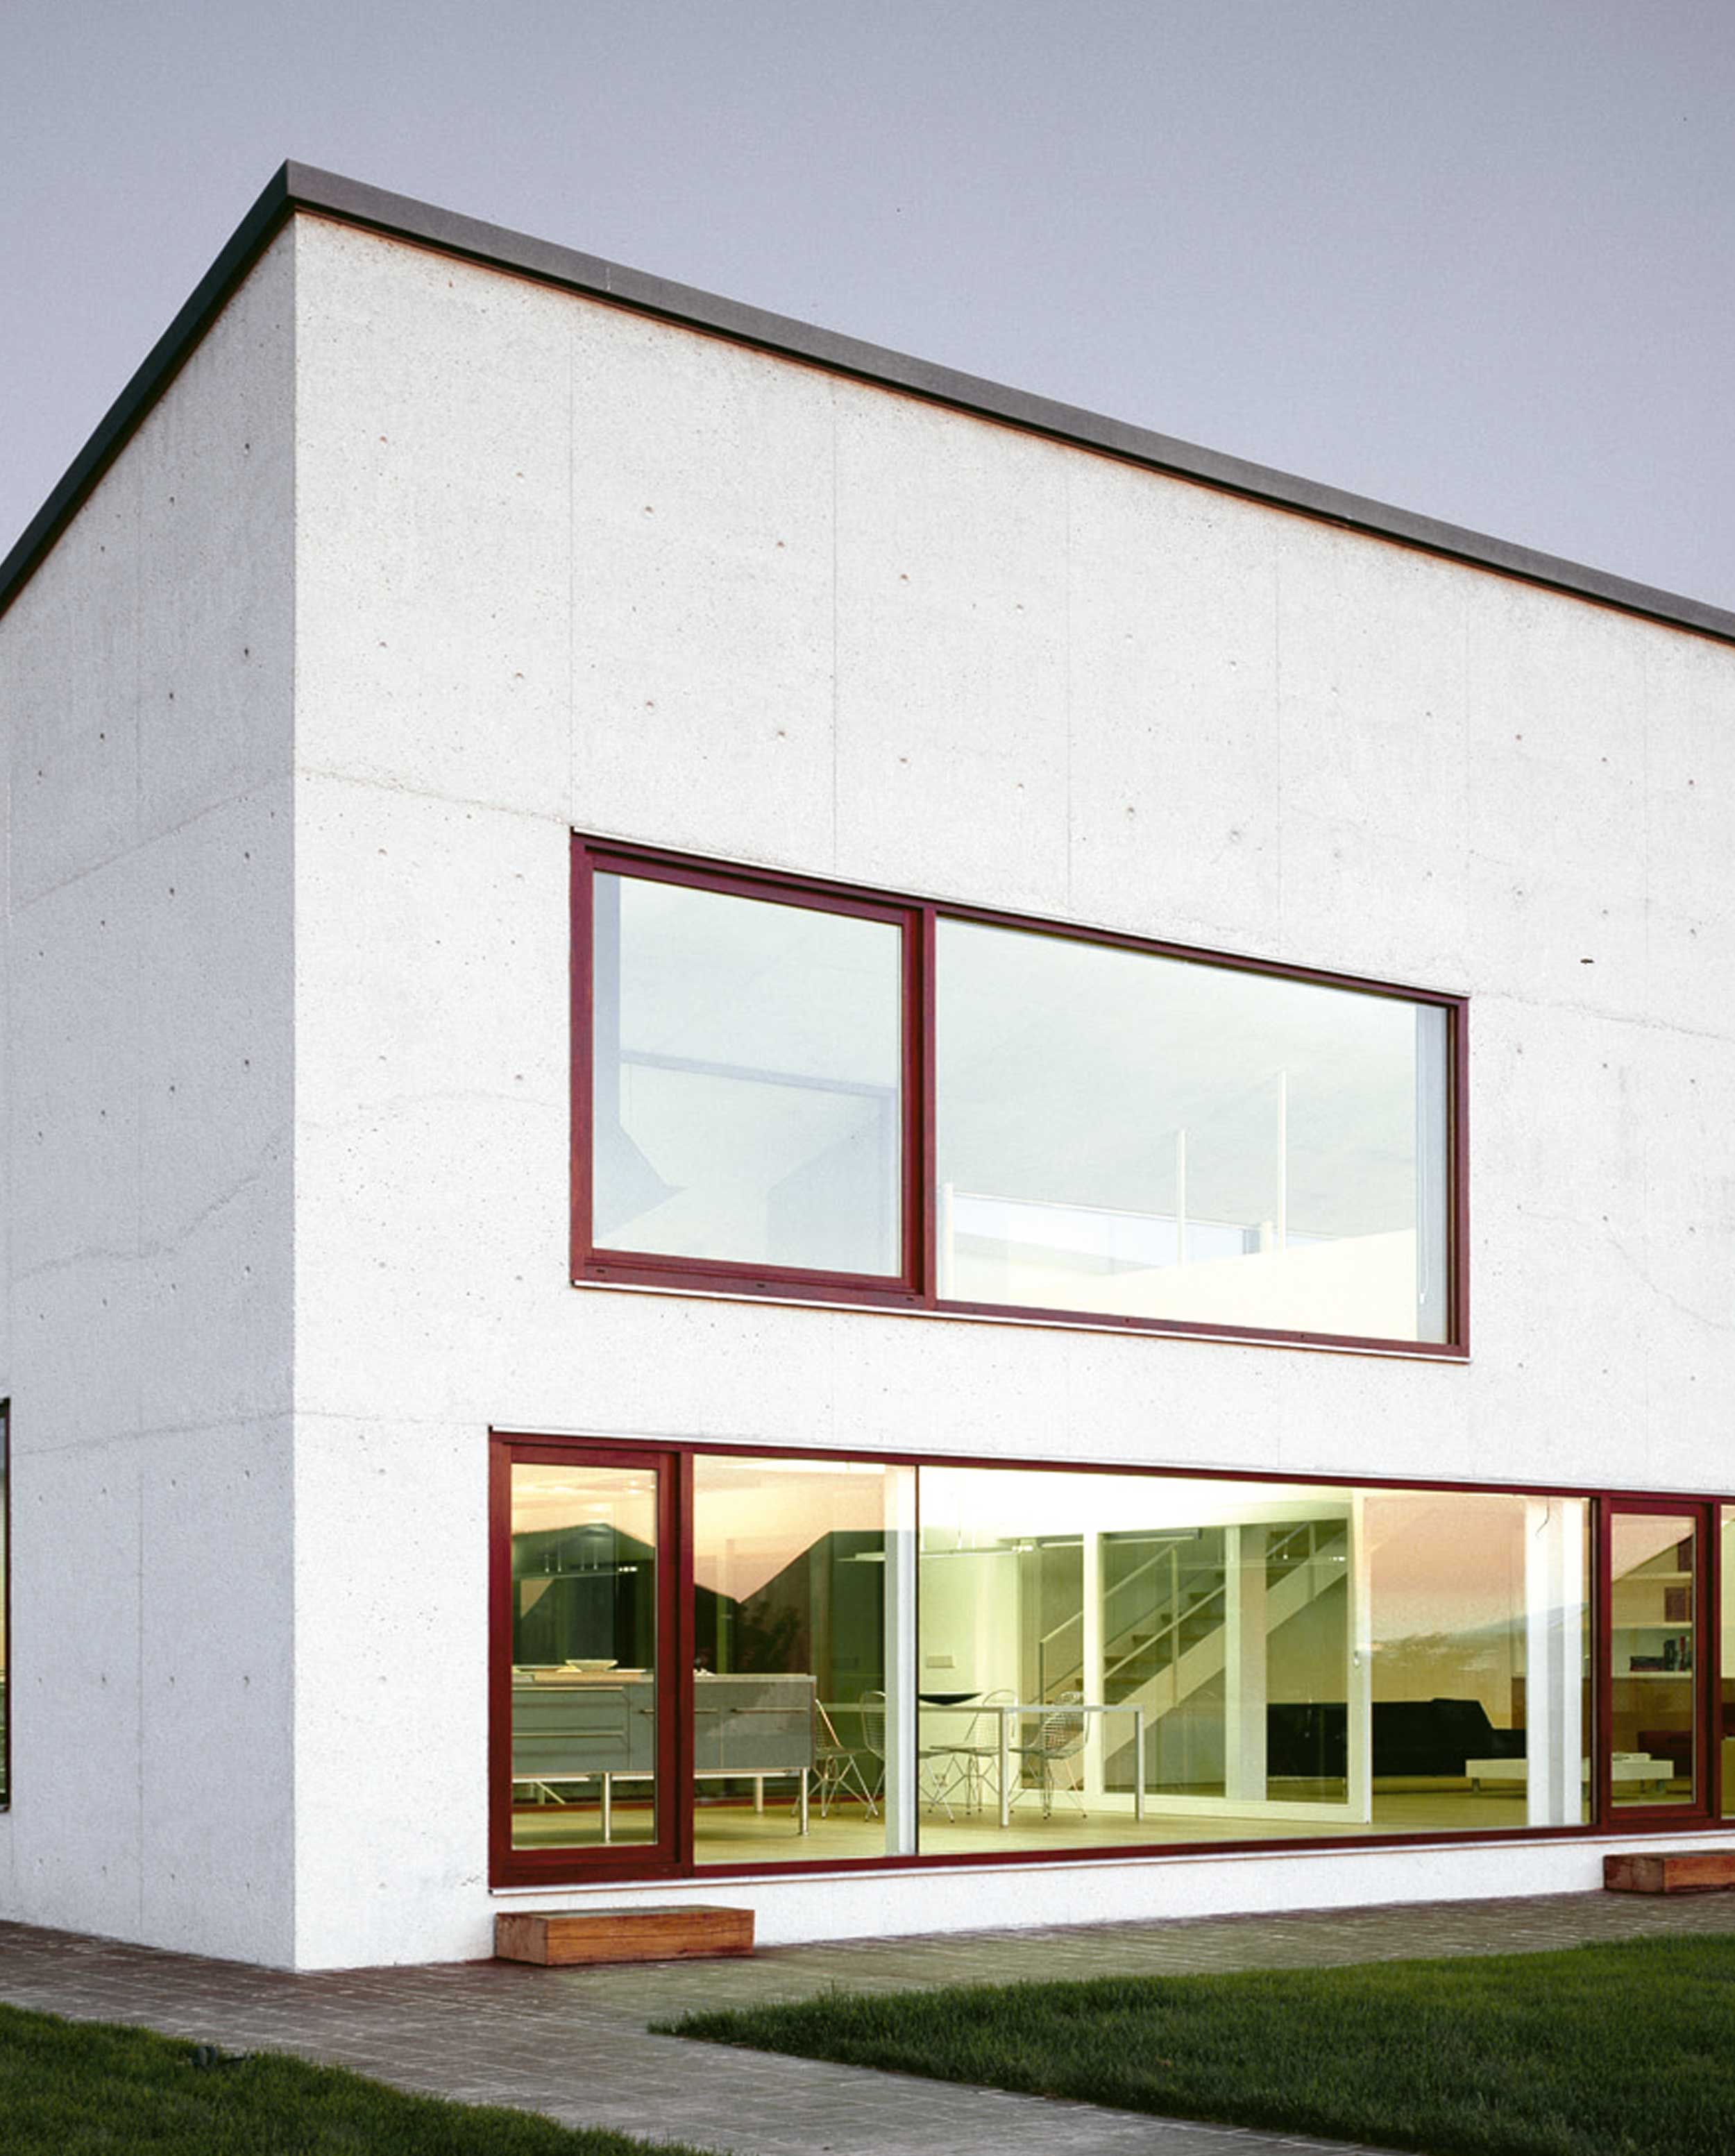 Casa en Gorraiz, Pamplona - Francisco Mangado | Arquitectura Viva